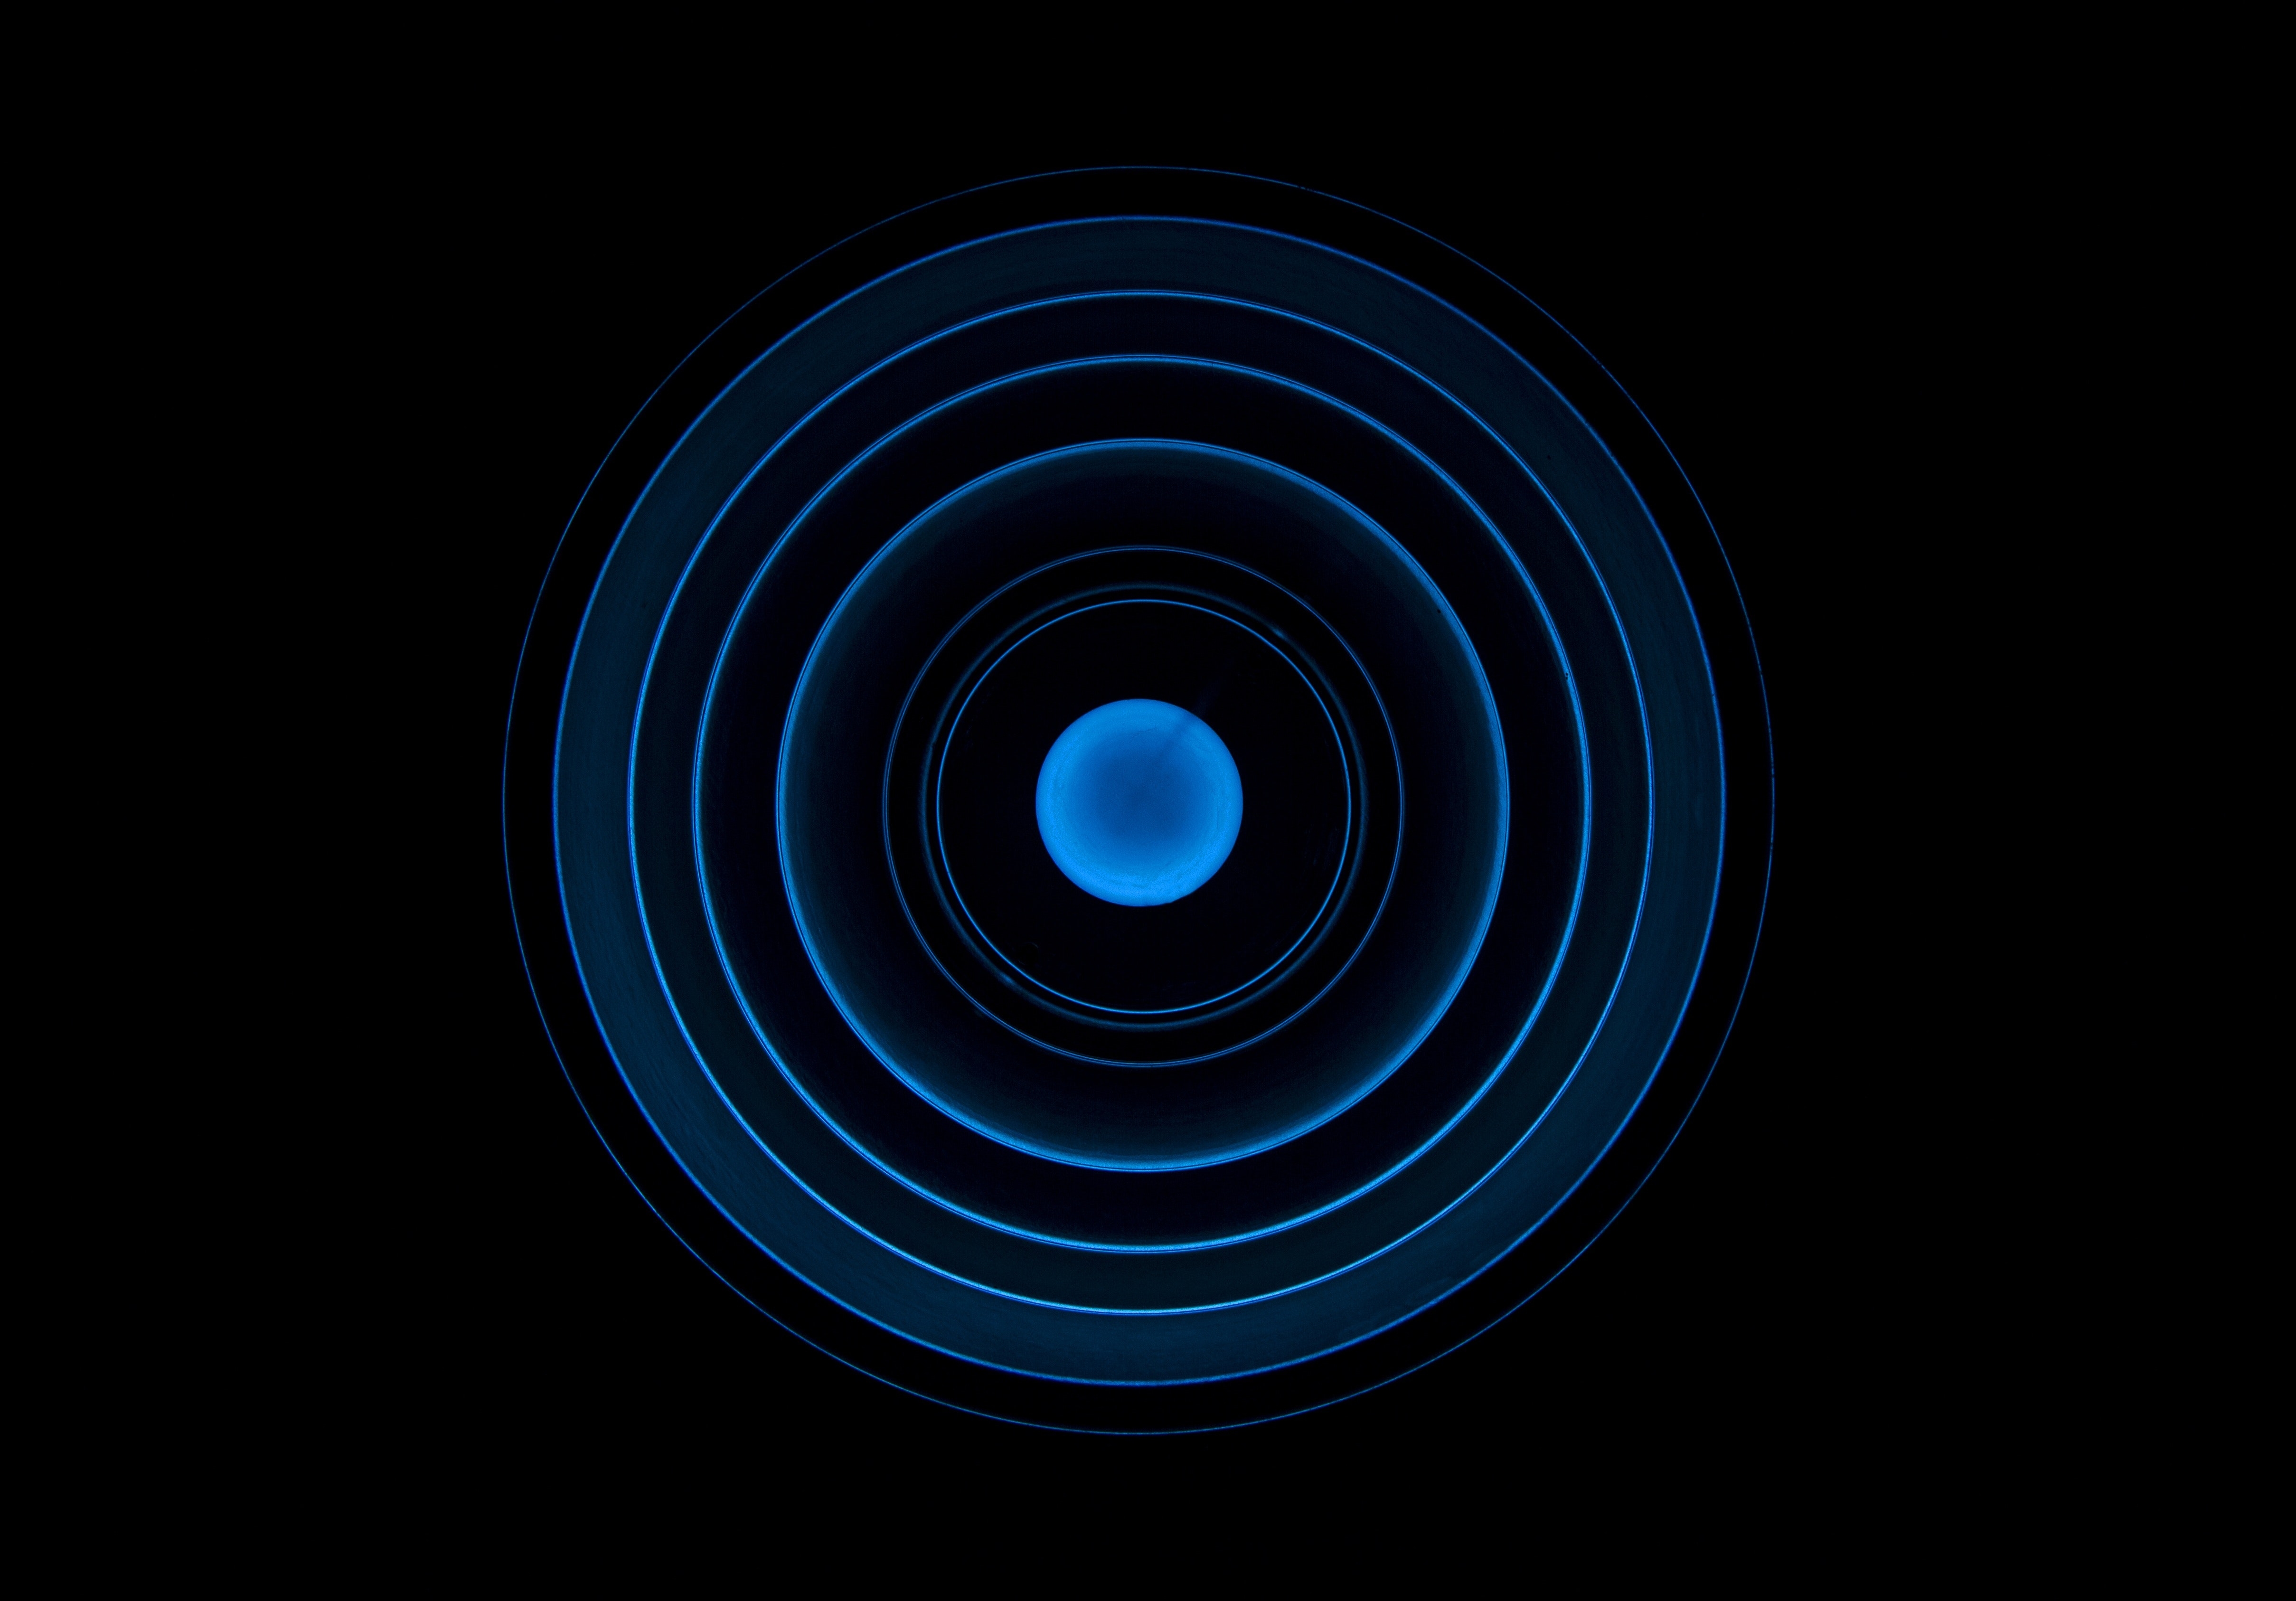 HD wallpaper, Circles, Spiral, Black Background, Illusion, Blue Rings, 5K